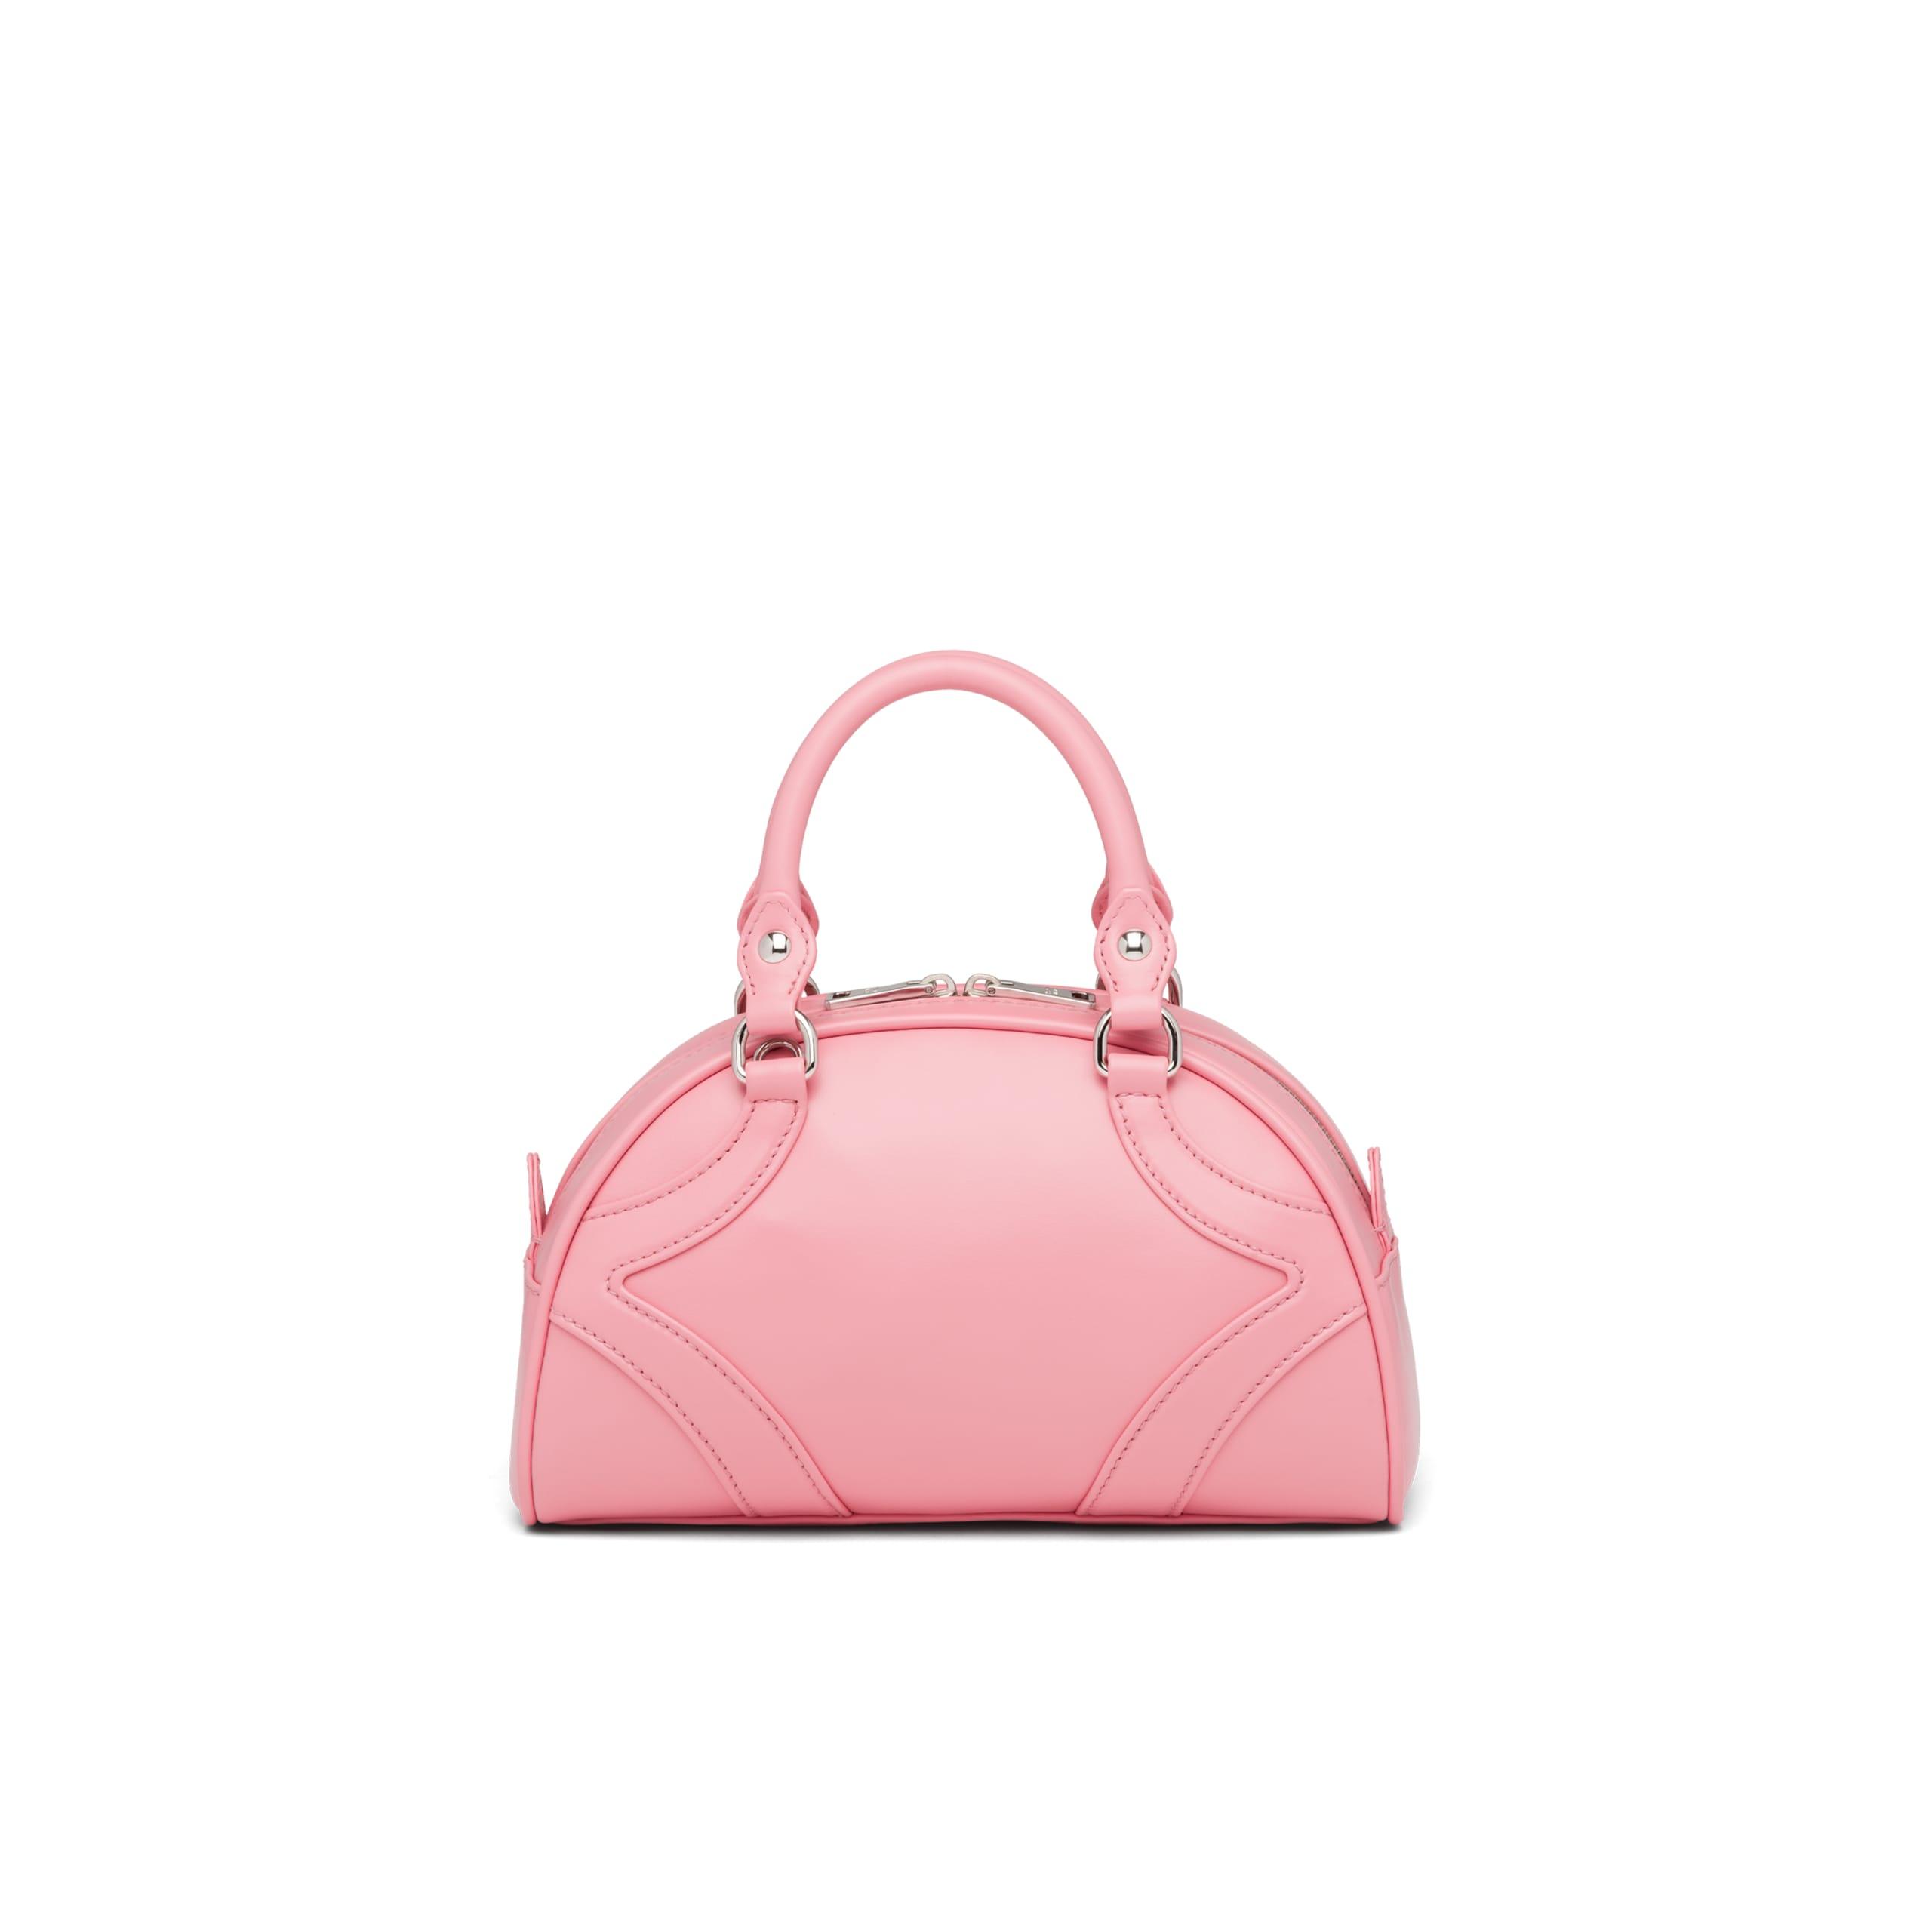 Prada - Authenticated Bowling Handbag - Silk Pink Floral for Women, Never Worn